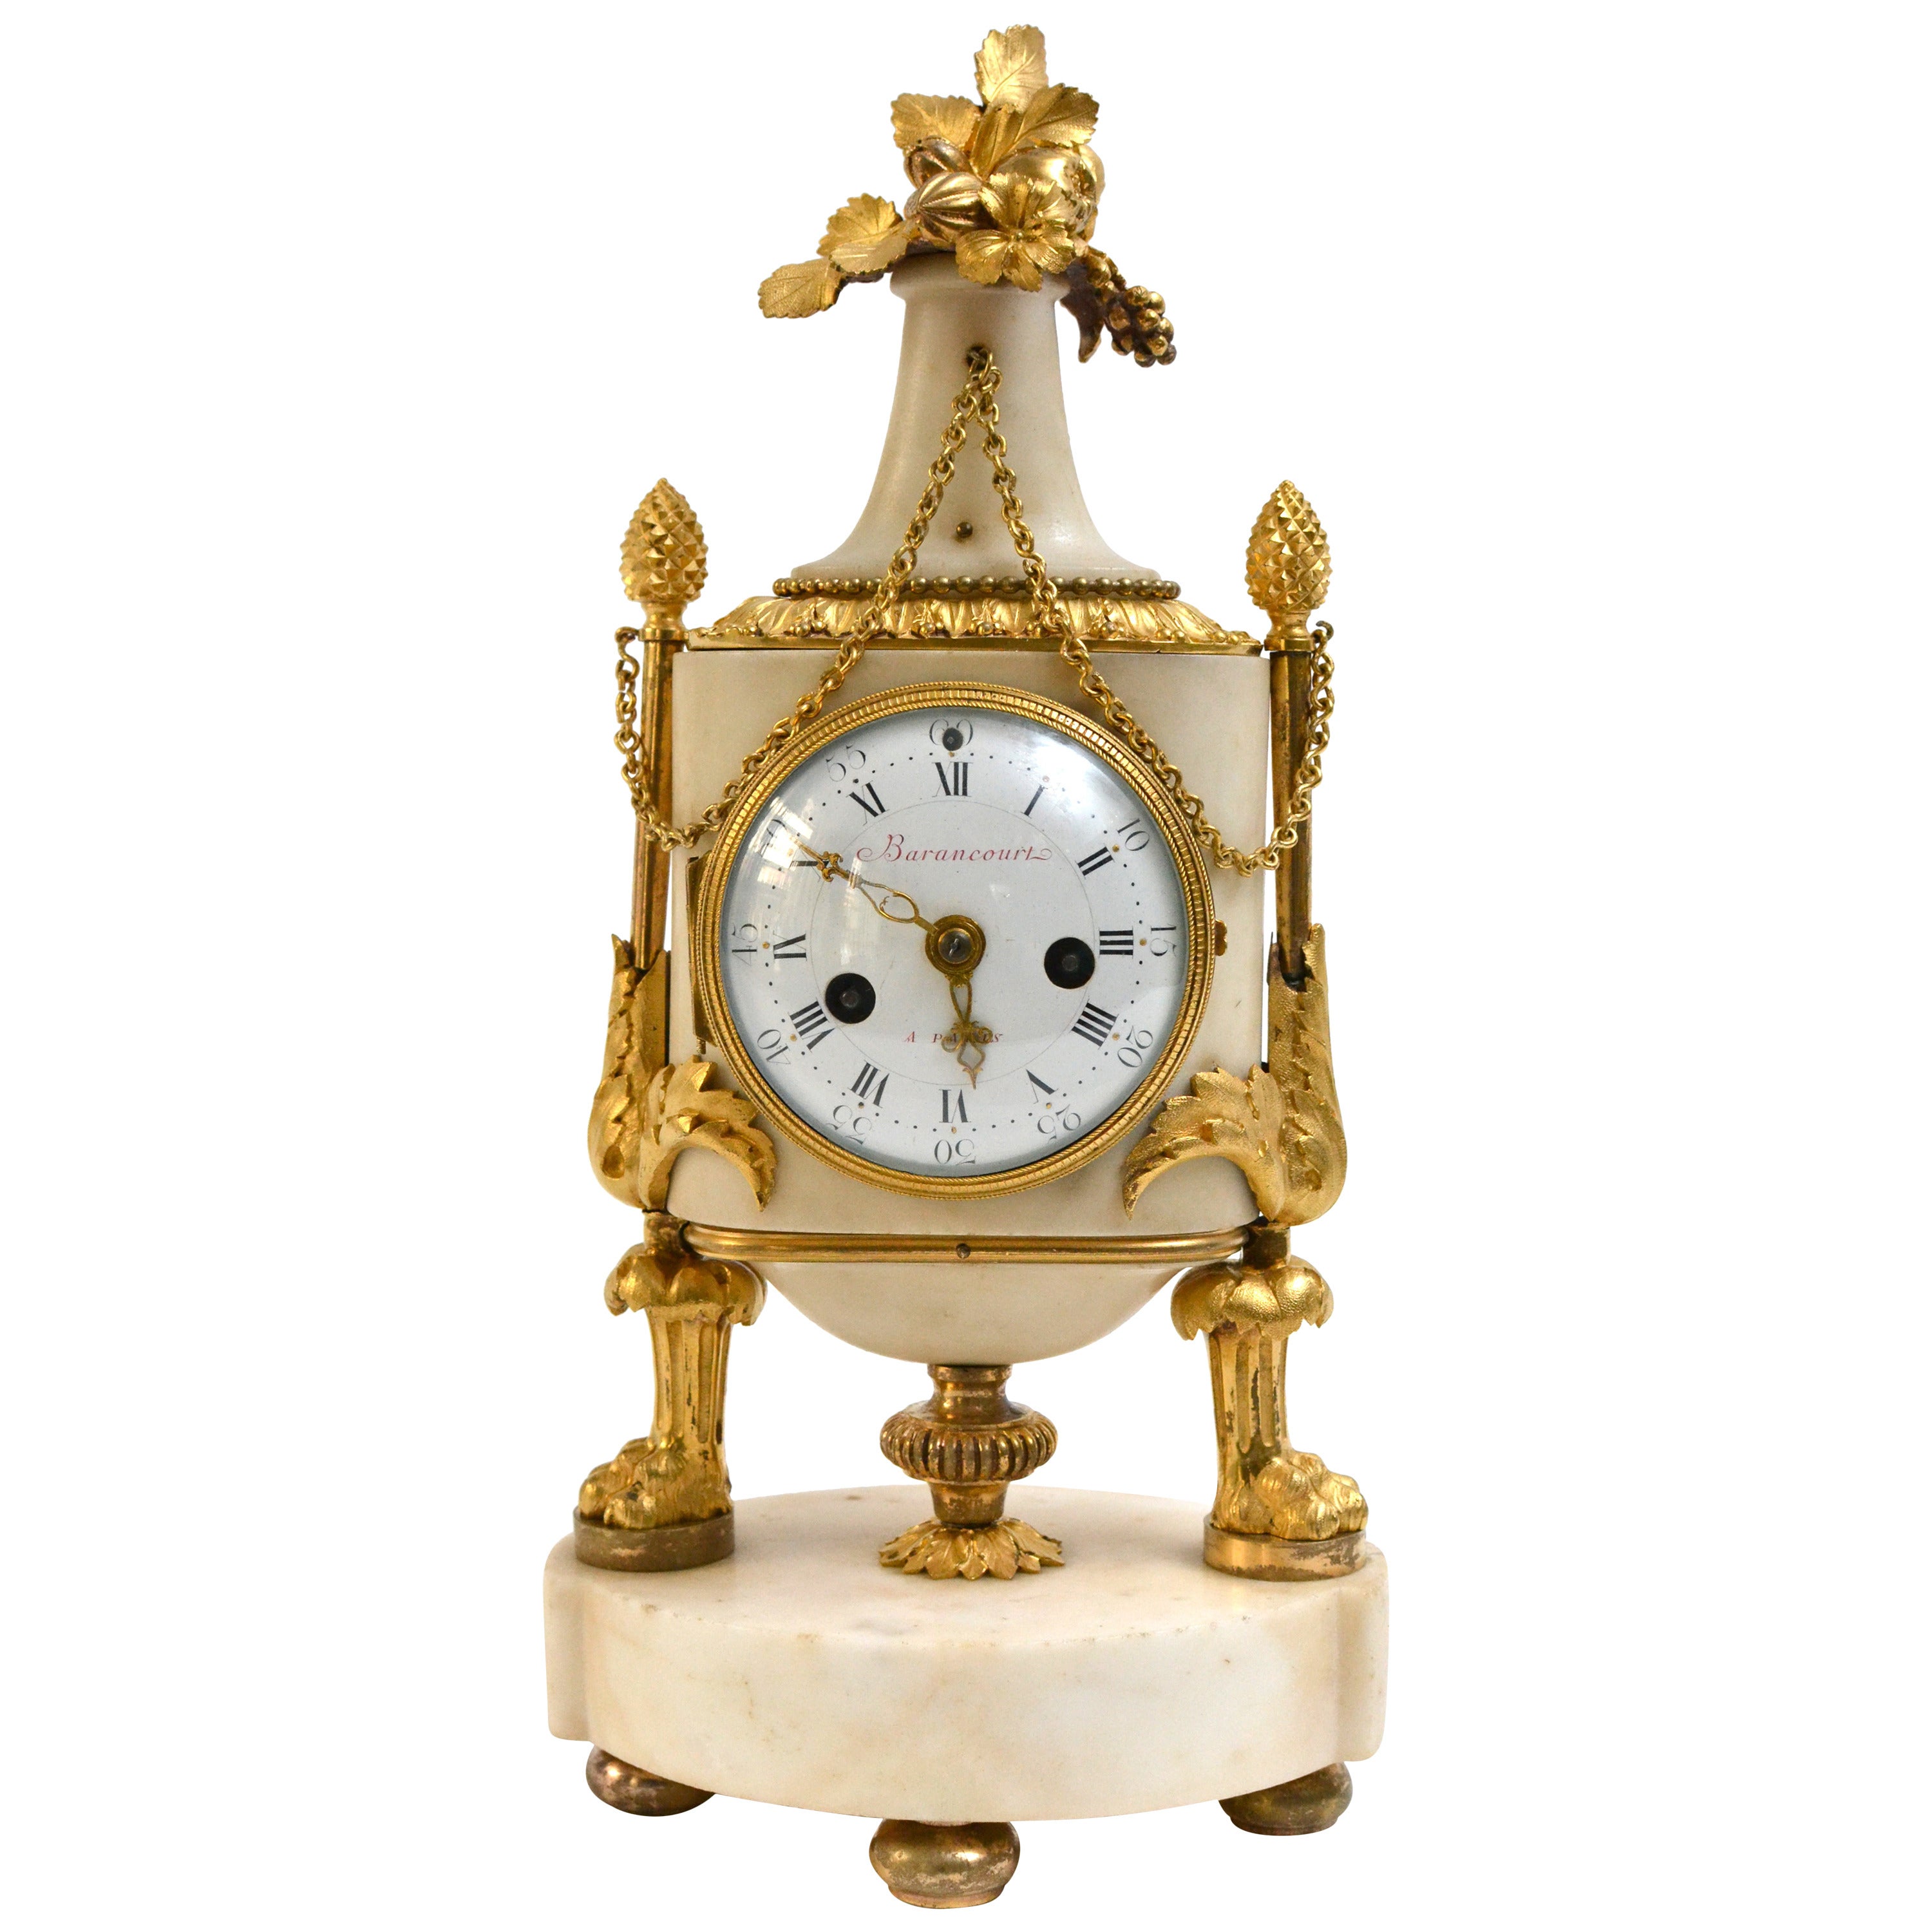 Louis XVI Ormolu and Marble Mantel Clock, Signed Barancourt a Paris